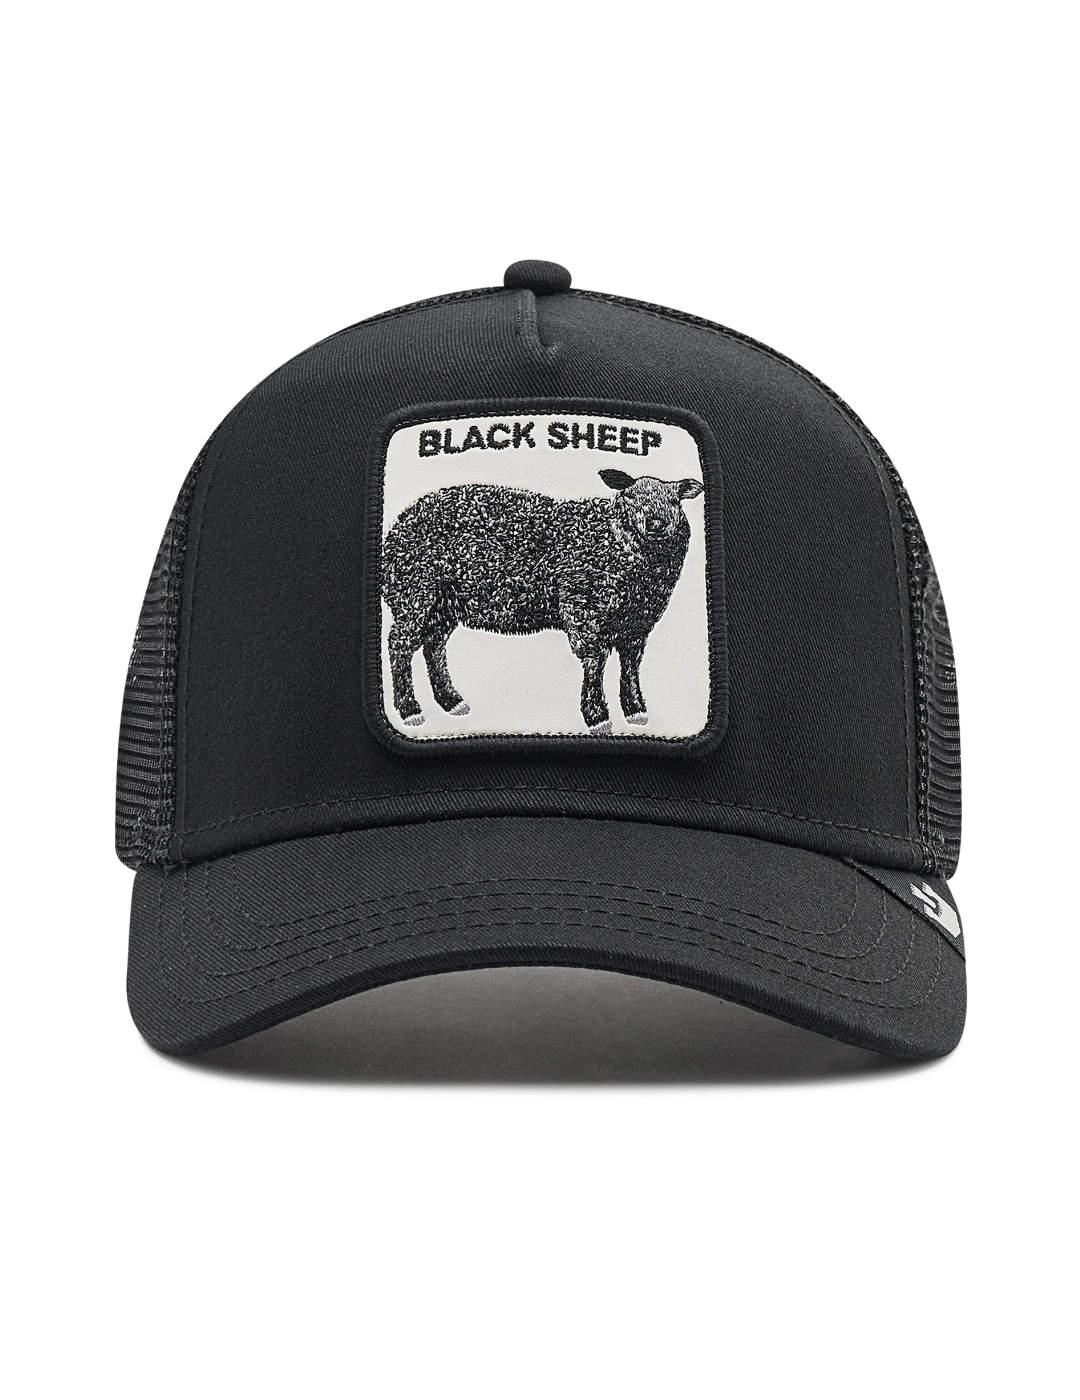 Gorra Goorin Bros The Black Sheep negro unisex